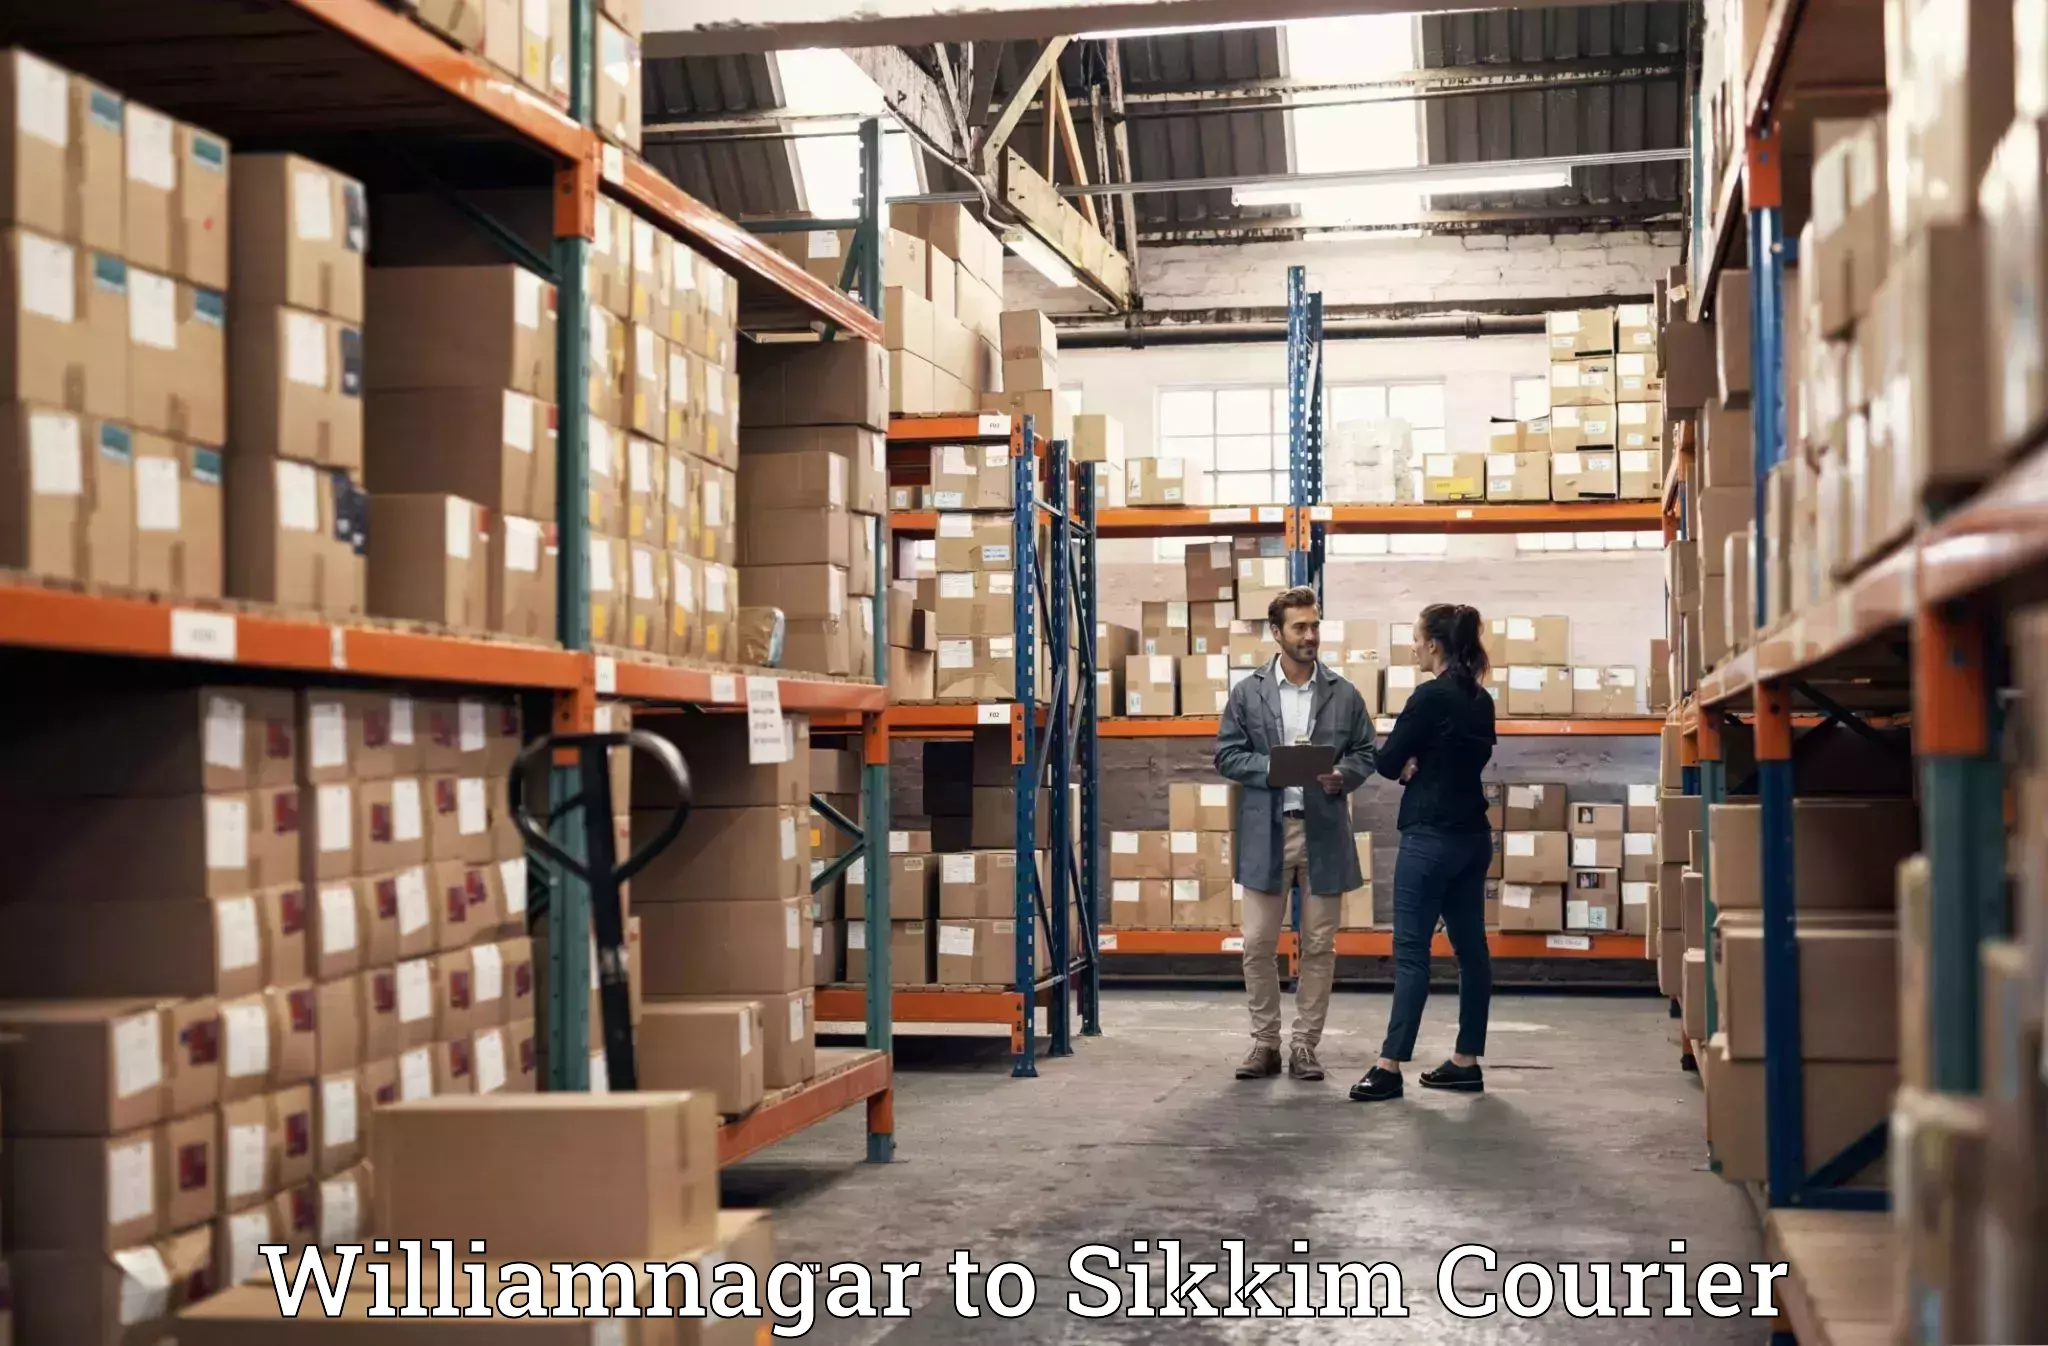 Professional moving company Williamnagar to Pelling